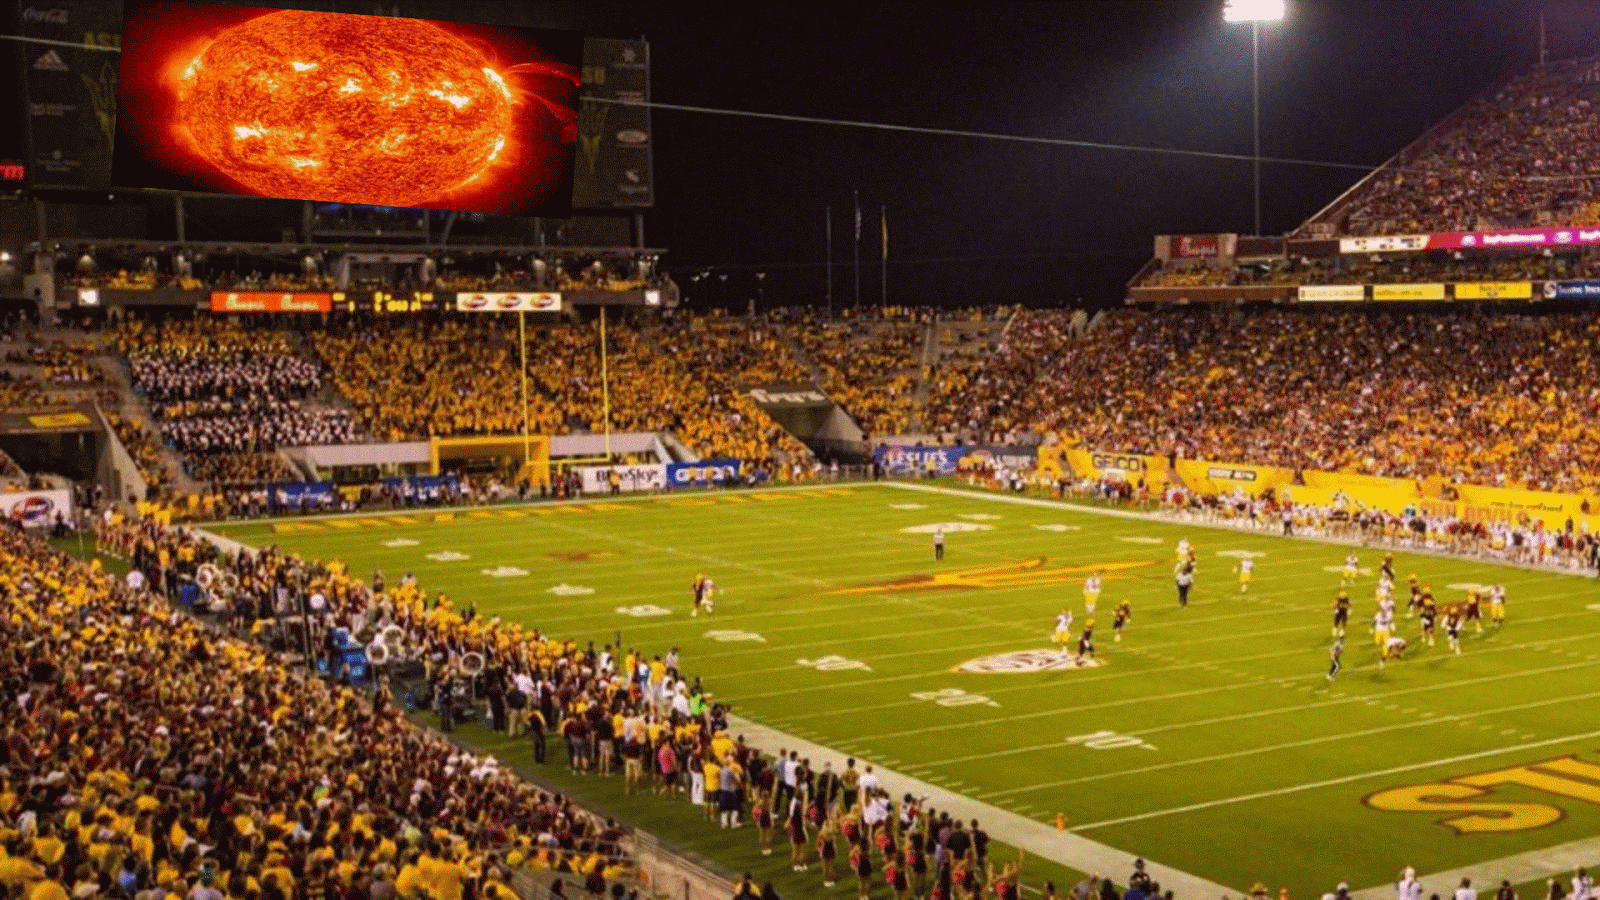 a .gif showing smoke rings coming from scoreboard at ASU's Sun Devil Stadium